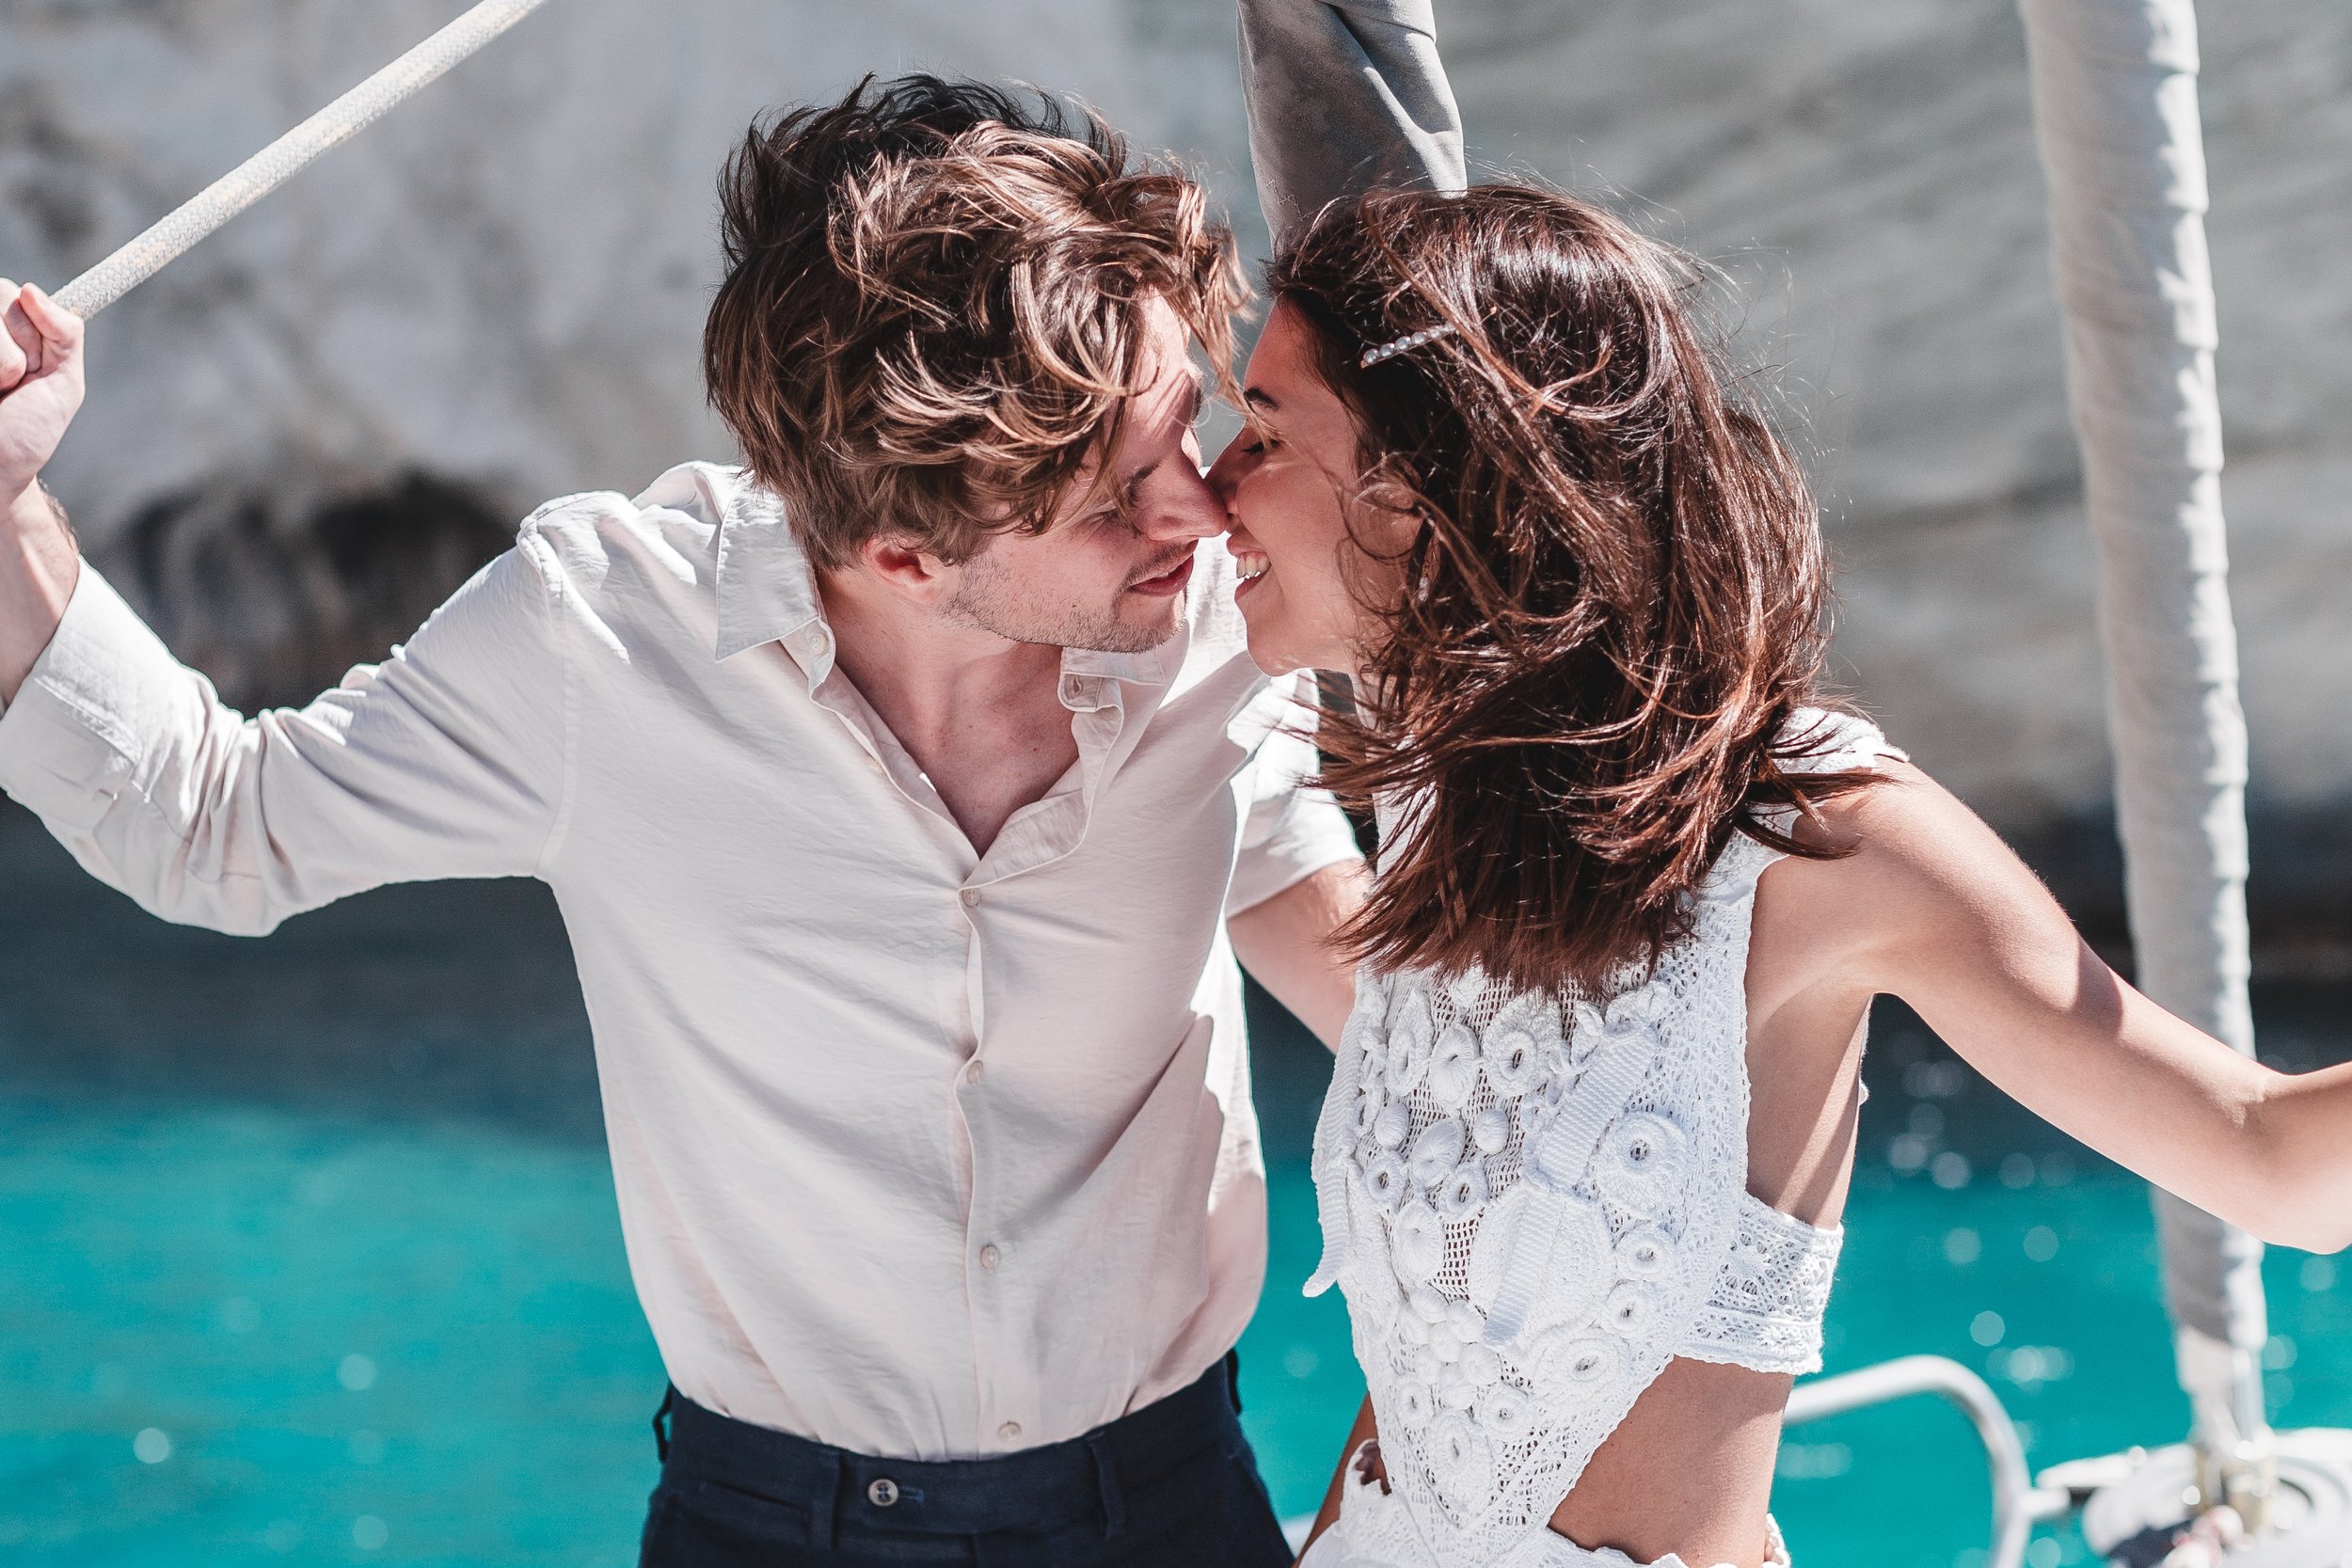 Adventure elopement on a yacht at Kleftiko in Milos, Greece